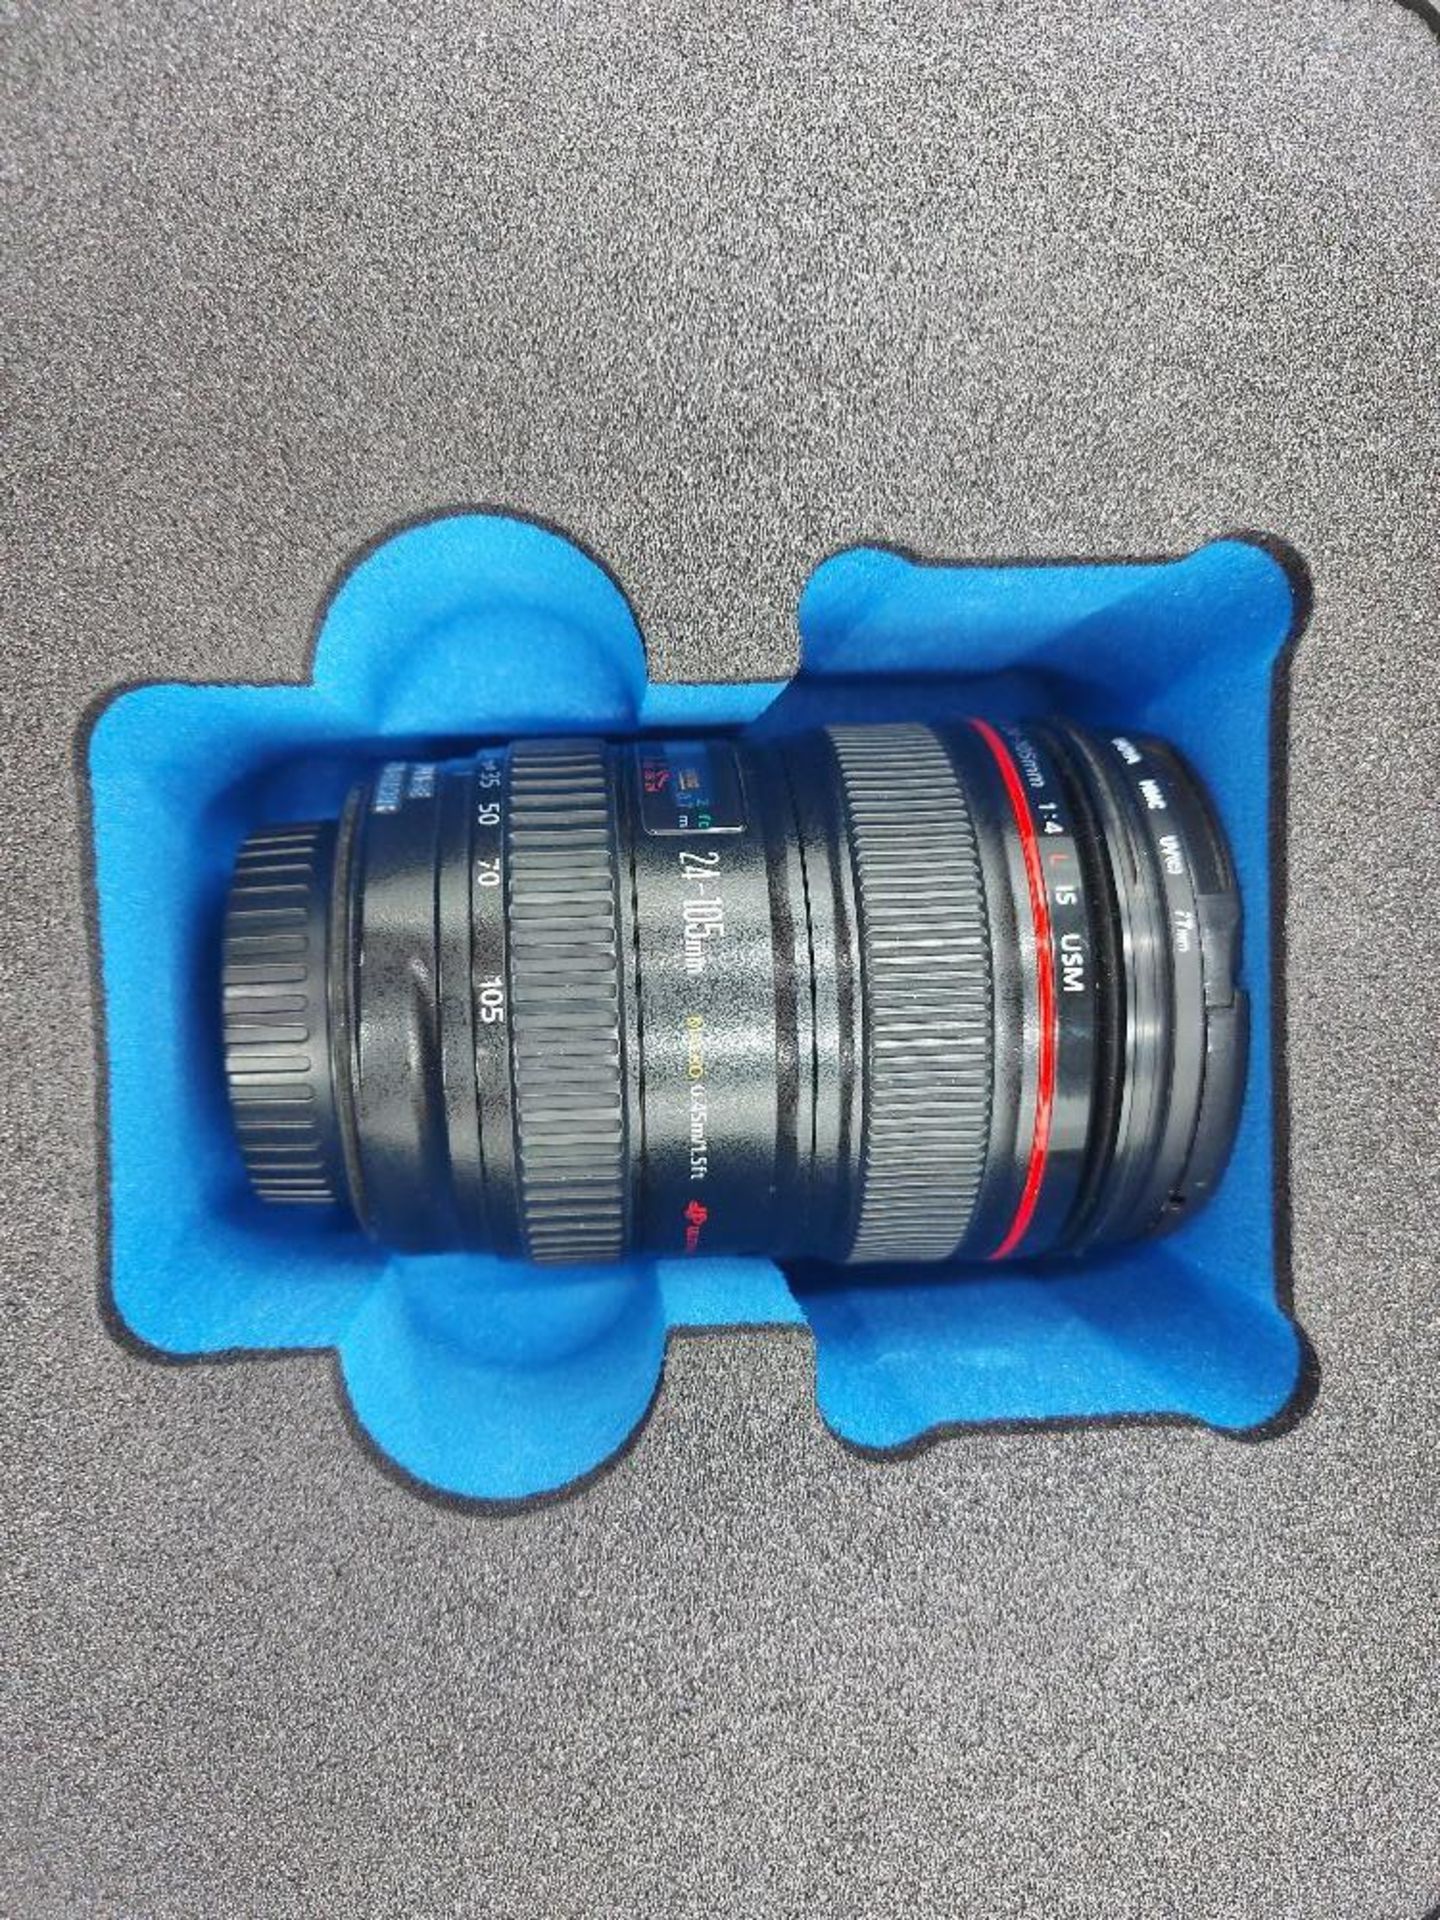 Canon EF 24-105mm 1:4 L IS USM Zoom Lens - Image 4 of 5